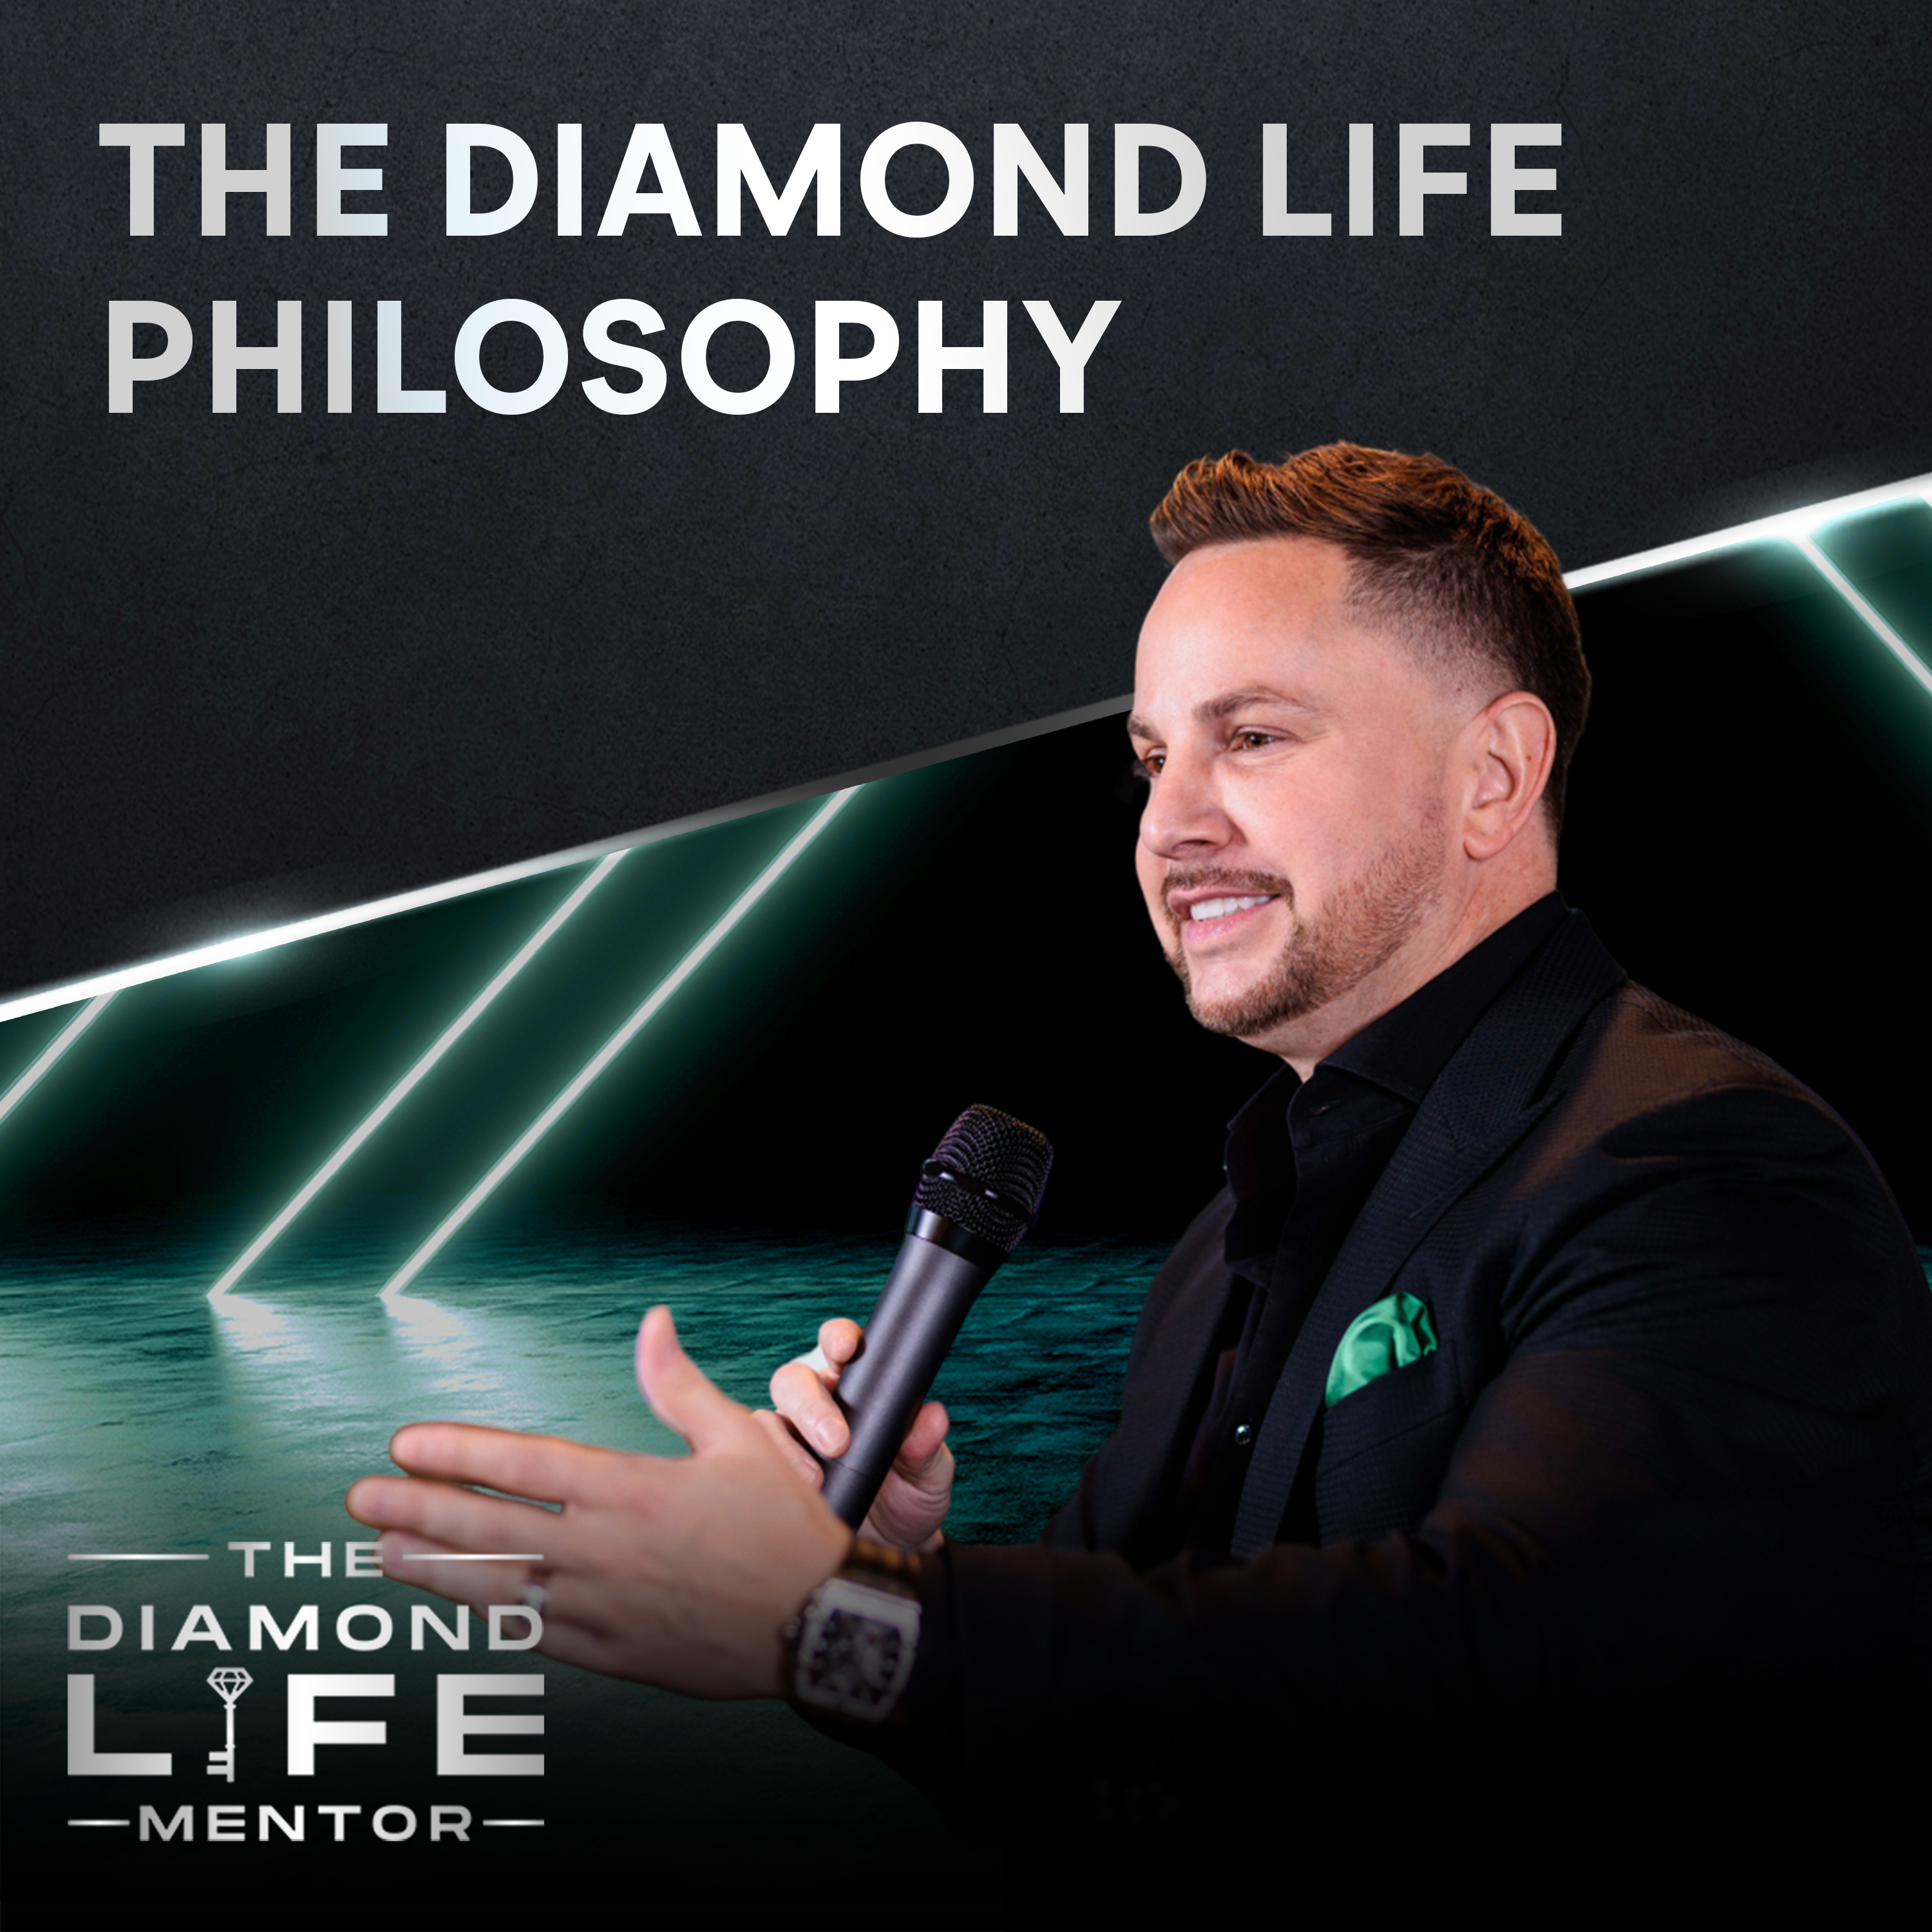 The Diamond Life Philosophy